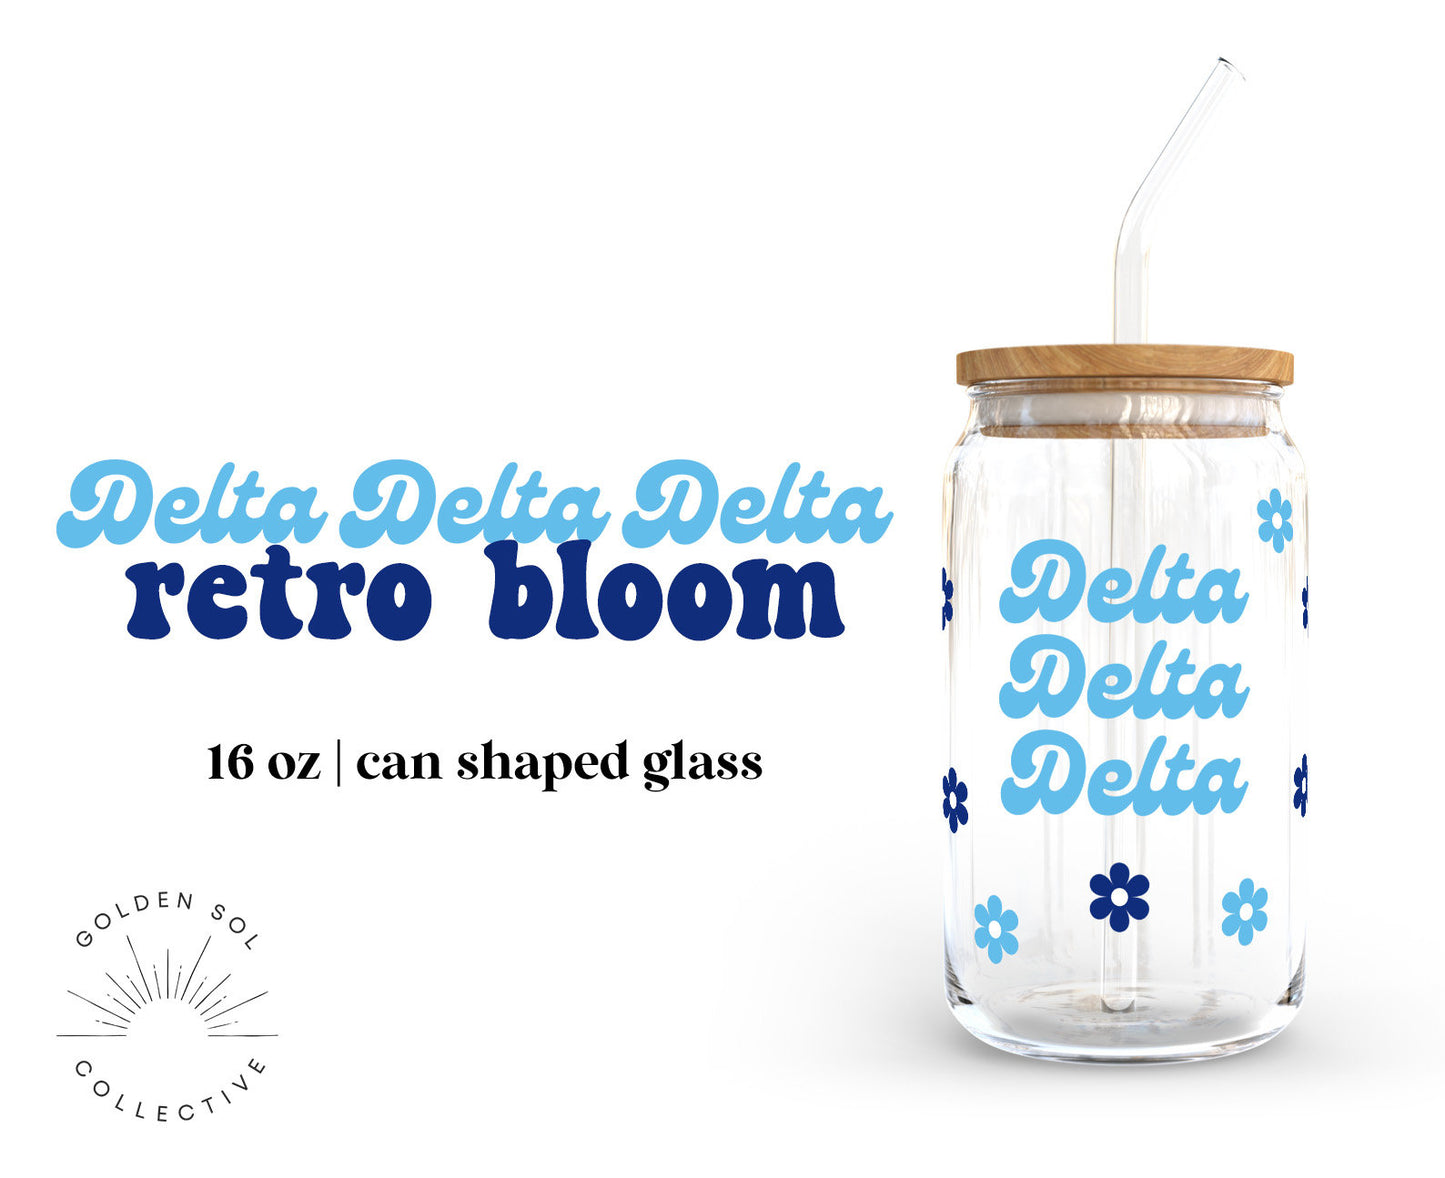 Delta Delta Delta Sorority Retro Bloom Can Shaped Glass